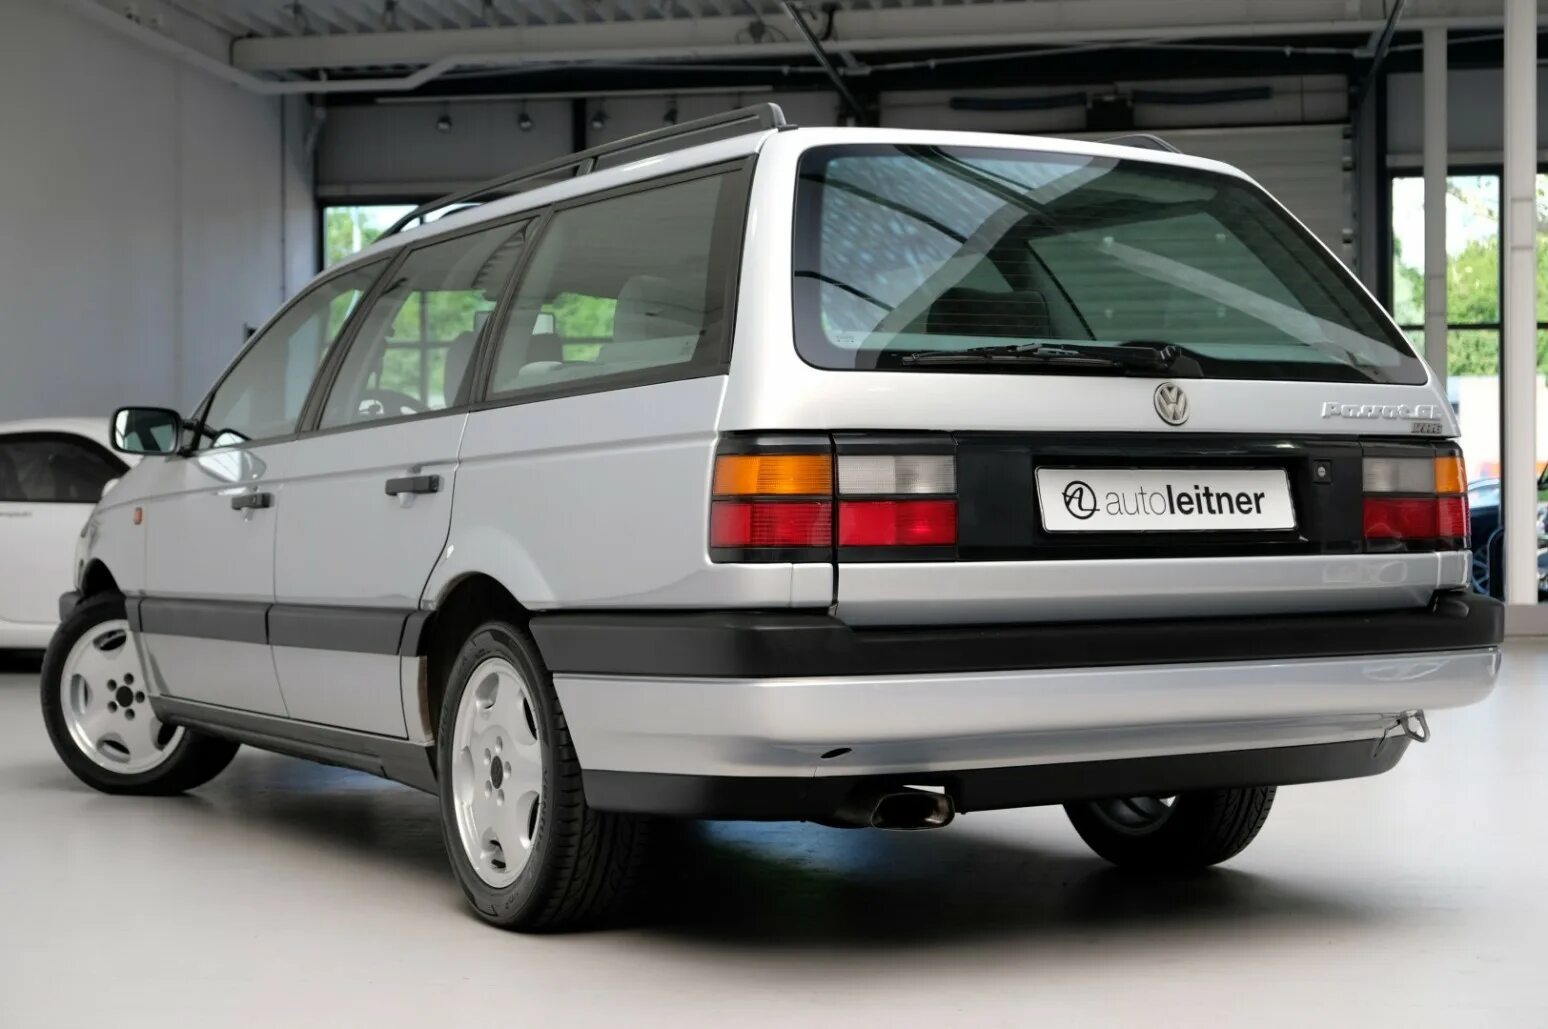 VW Passat vr6. Пассат универсал 1992 года. Passat vr6 1992г. Passat VR.